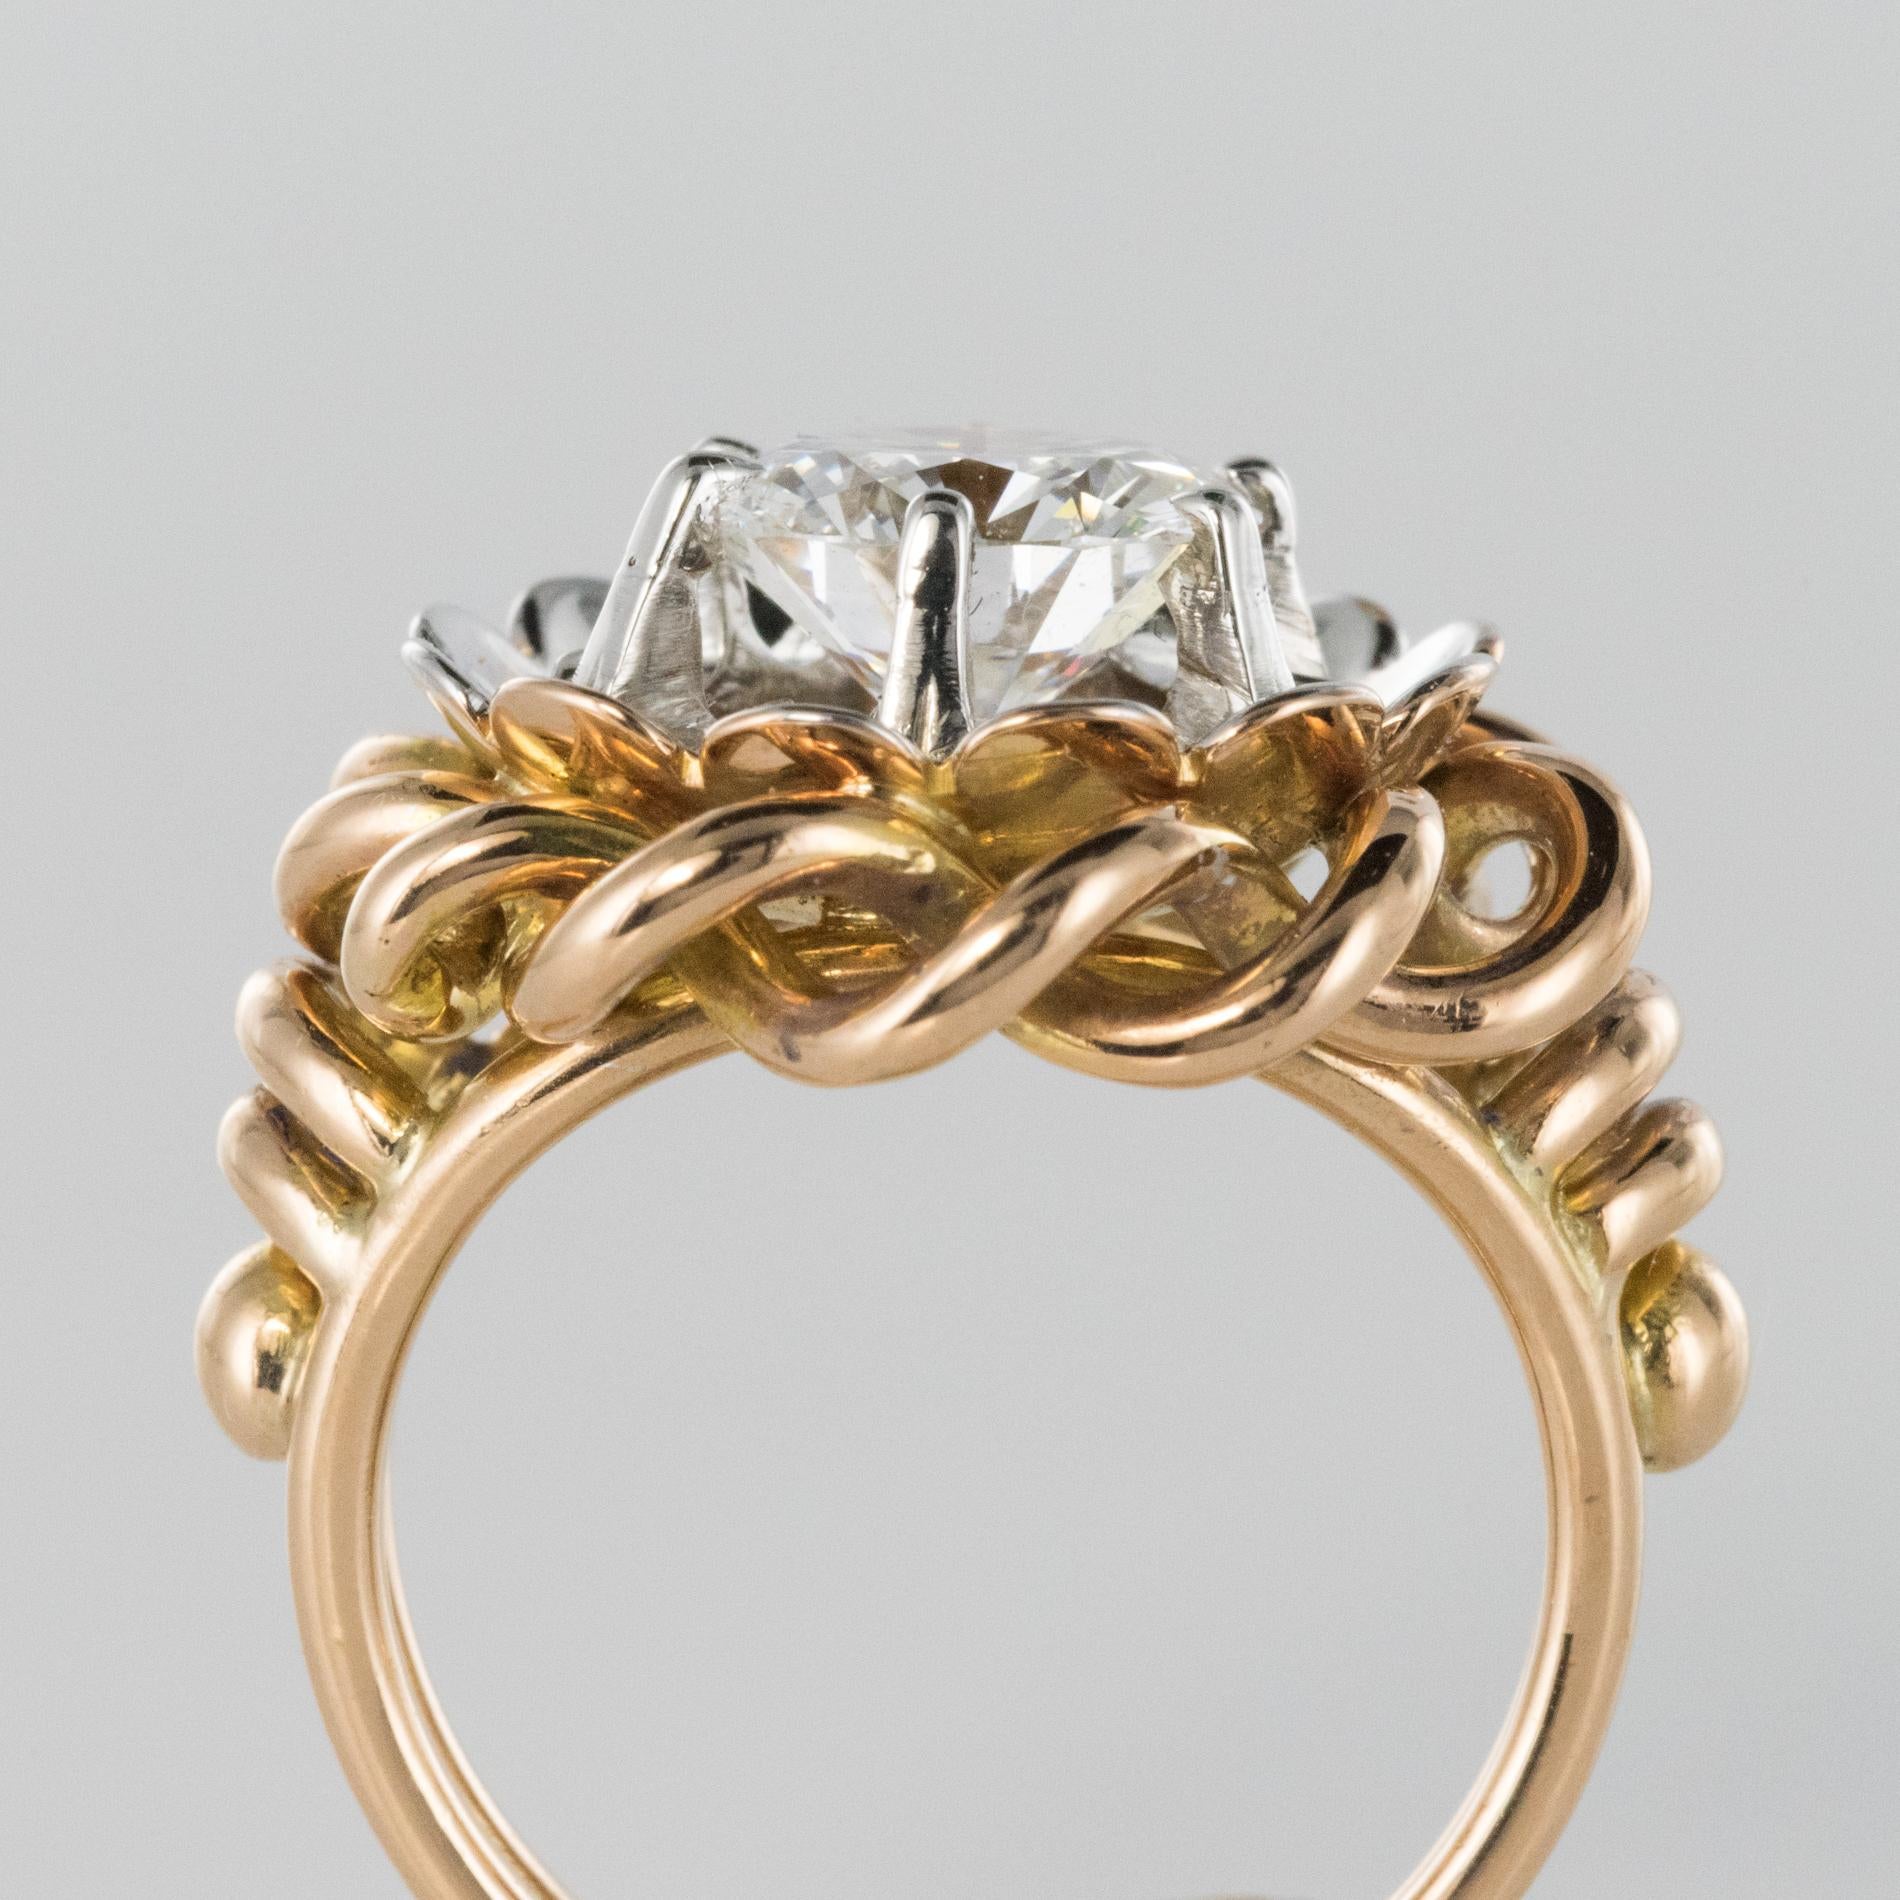 1960s Retro 2.06 Carat Diamond 18 Karat Yellow White Gold Solitary Ring For Sale 5